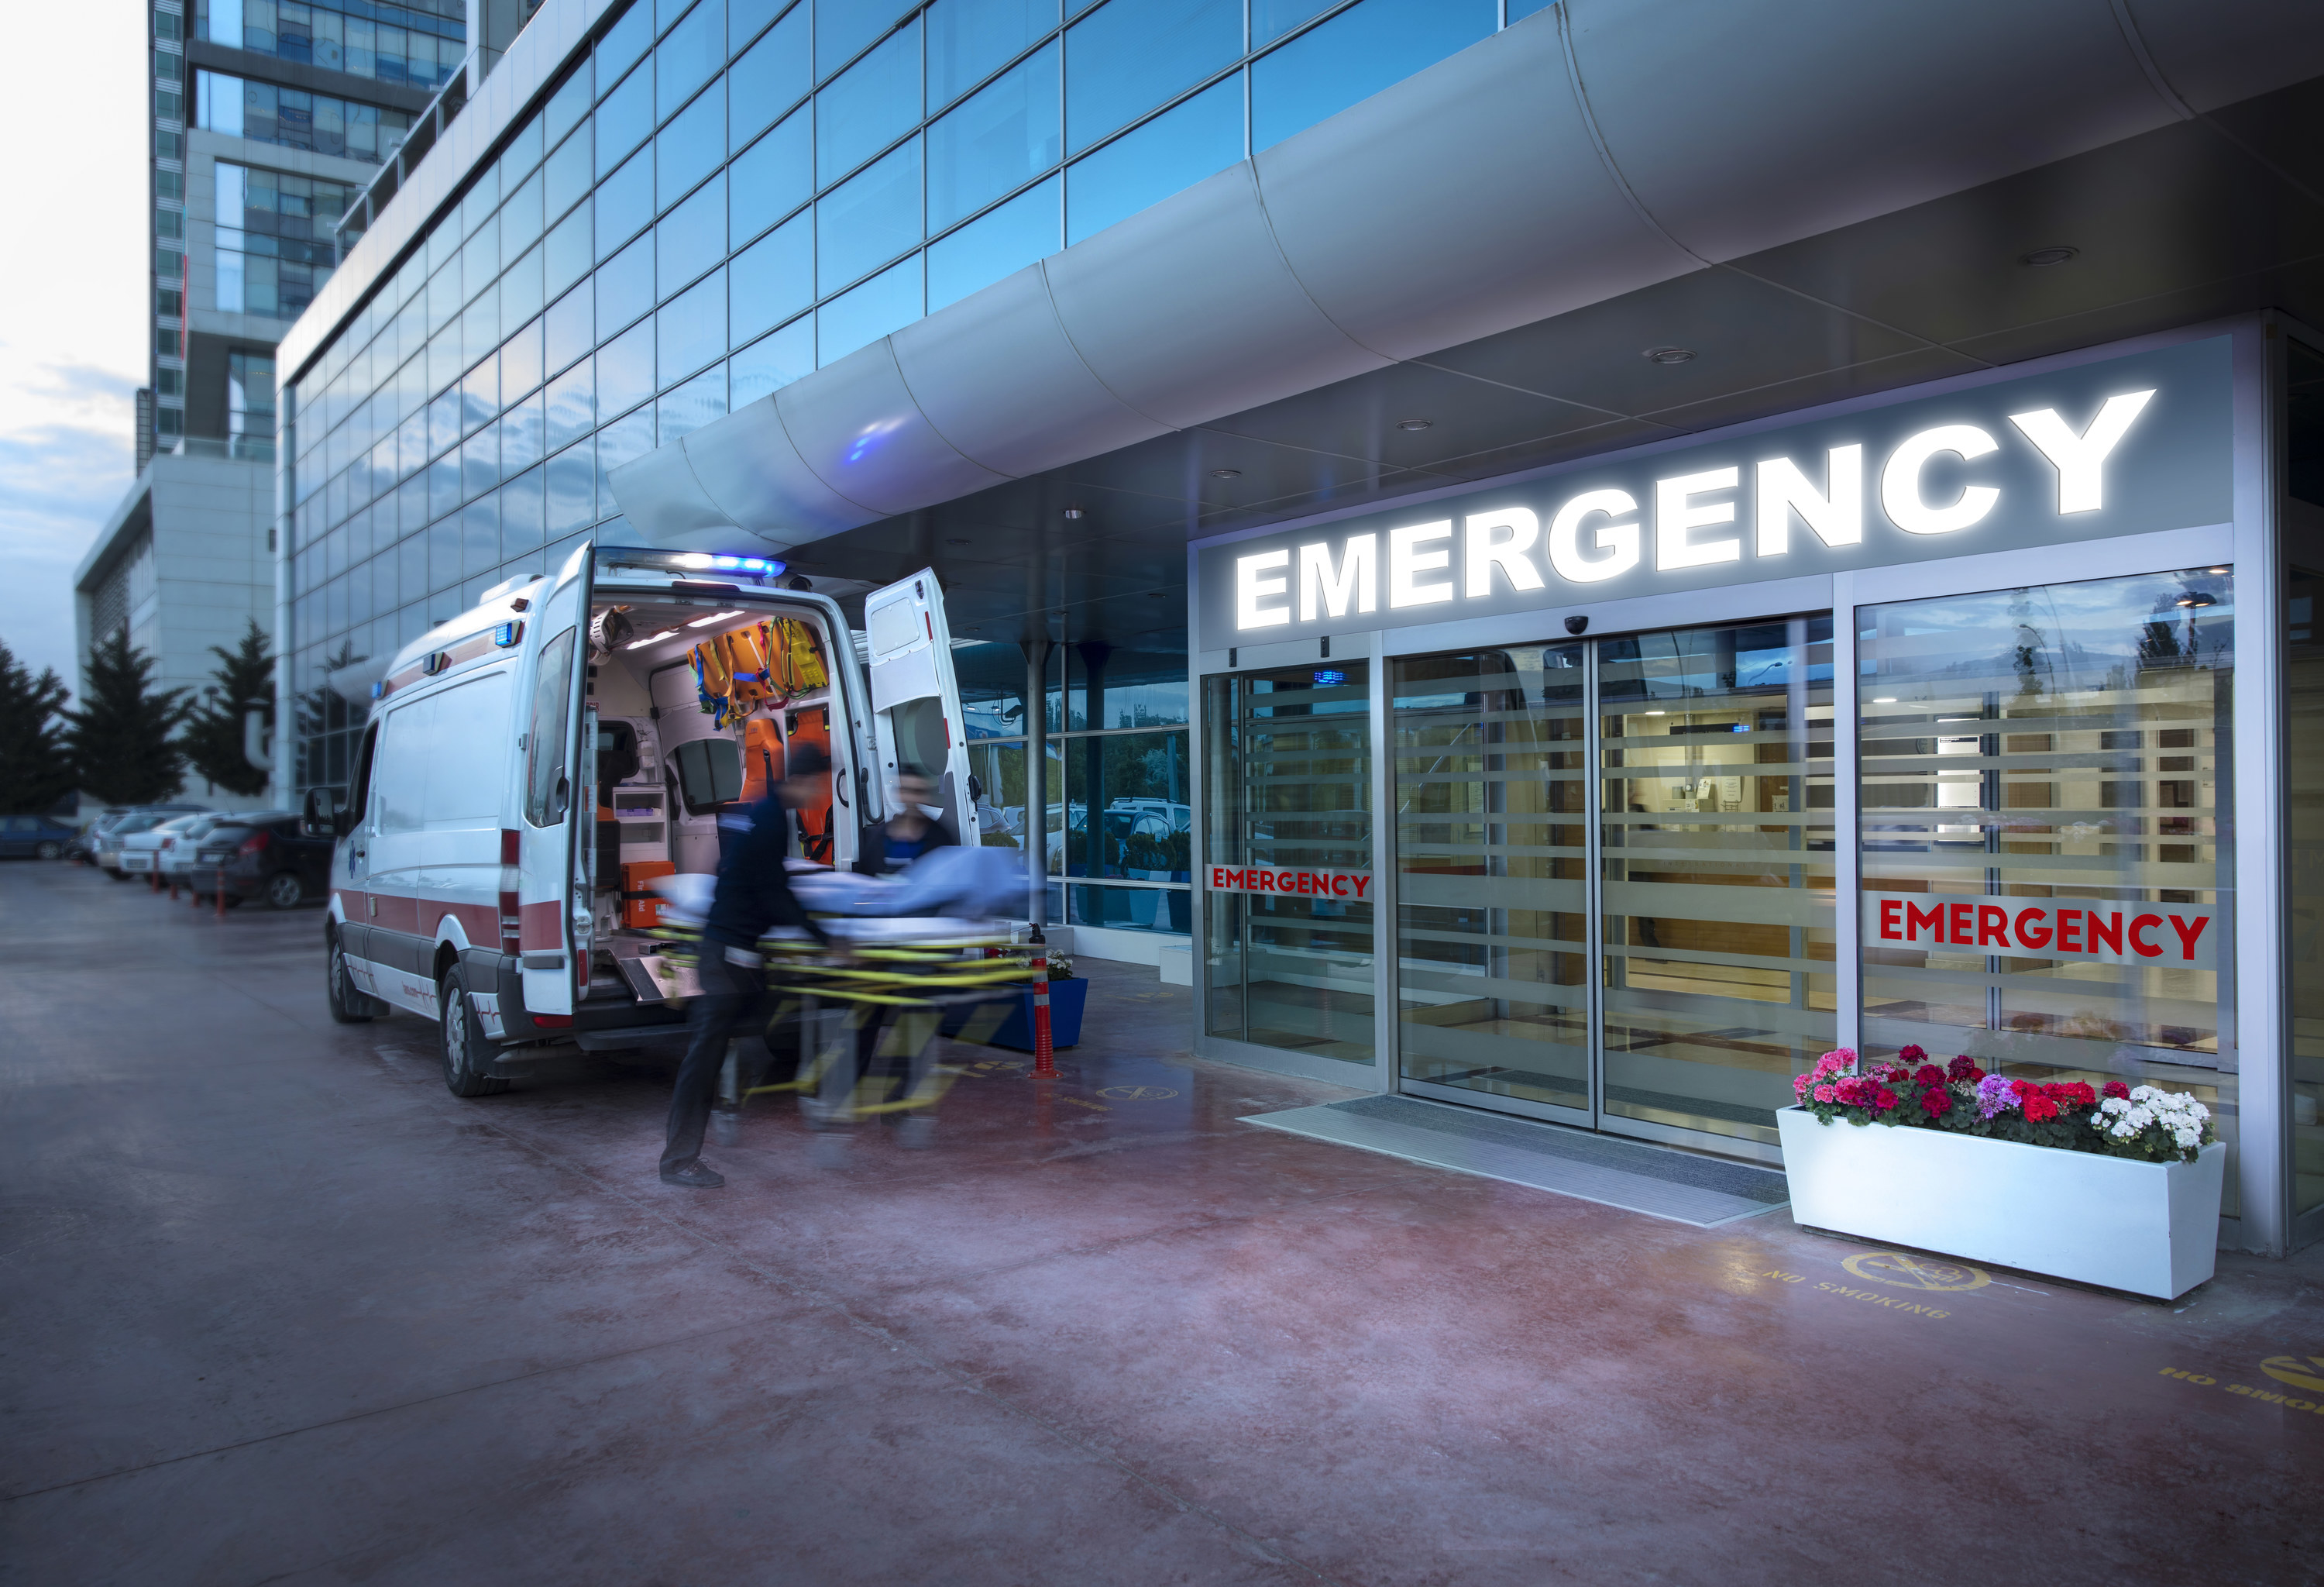 An ambulance outside of a hospital&#x27;s emergency room